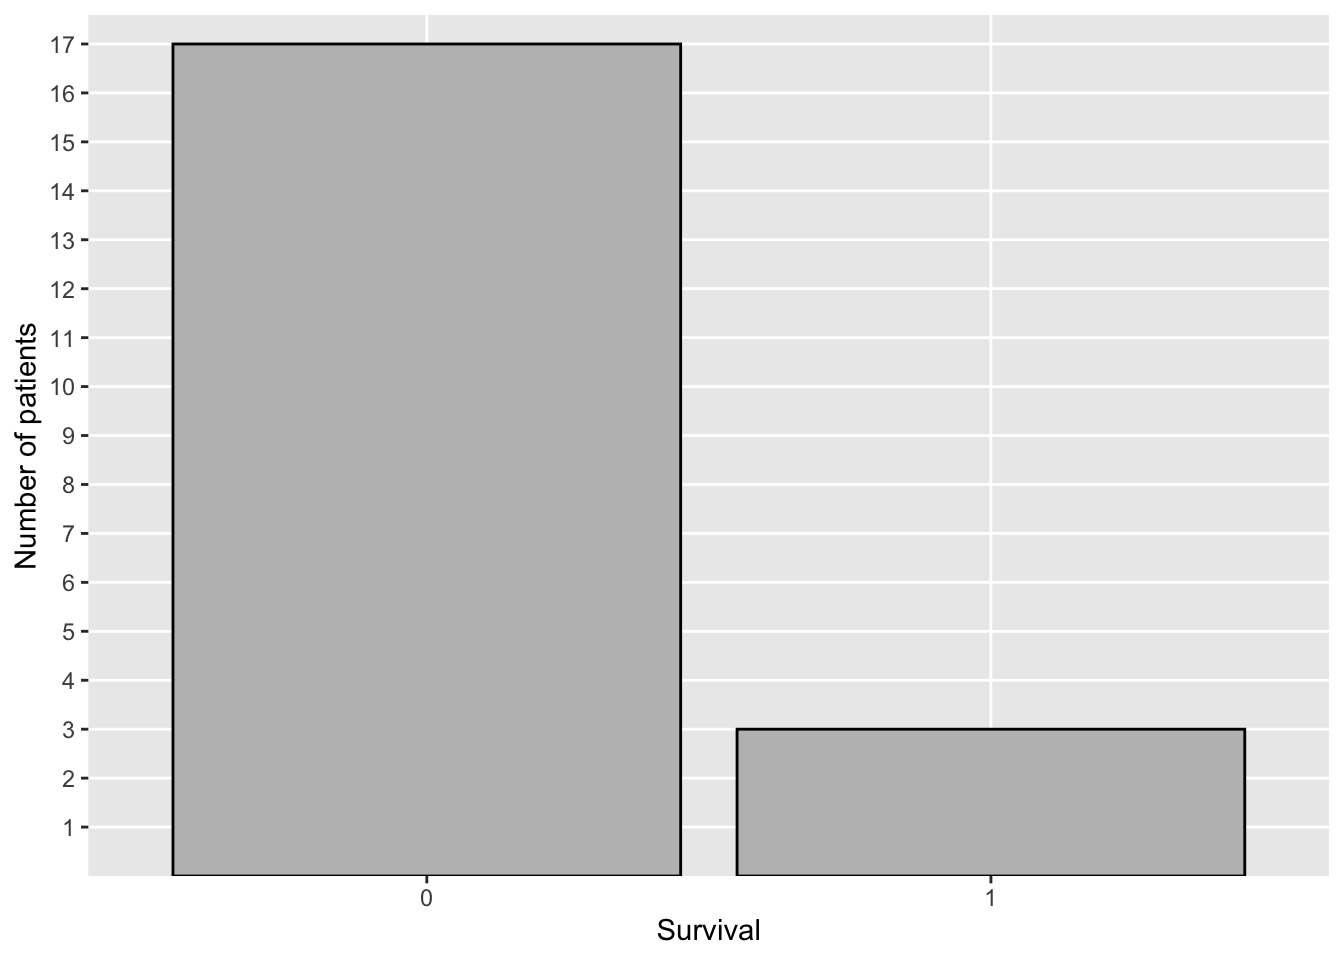 Distribution of Survival---COVID-19 Study